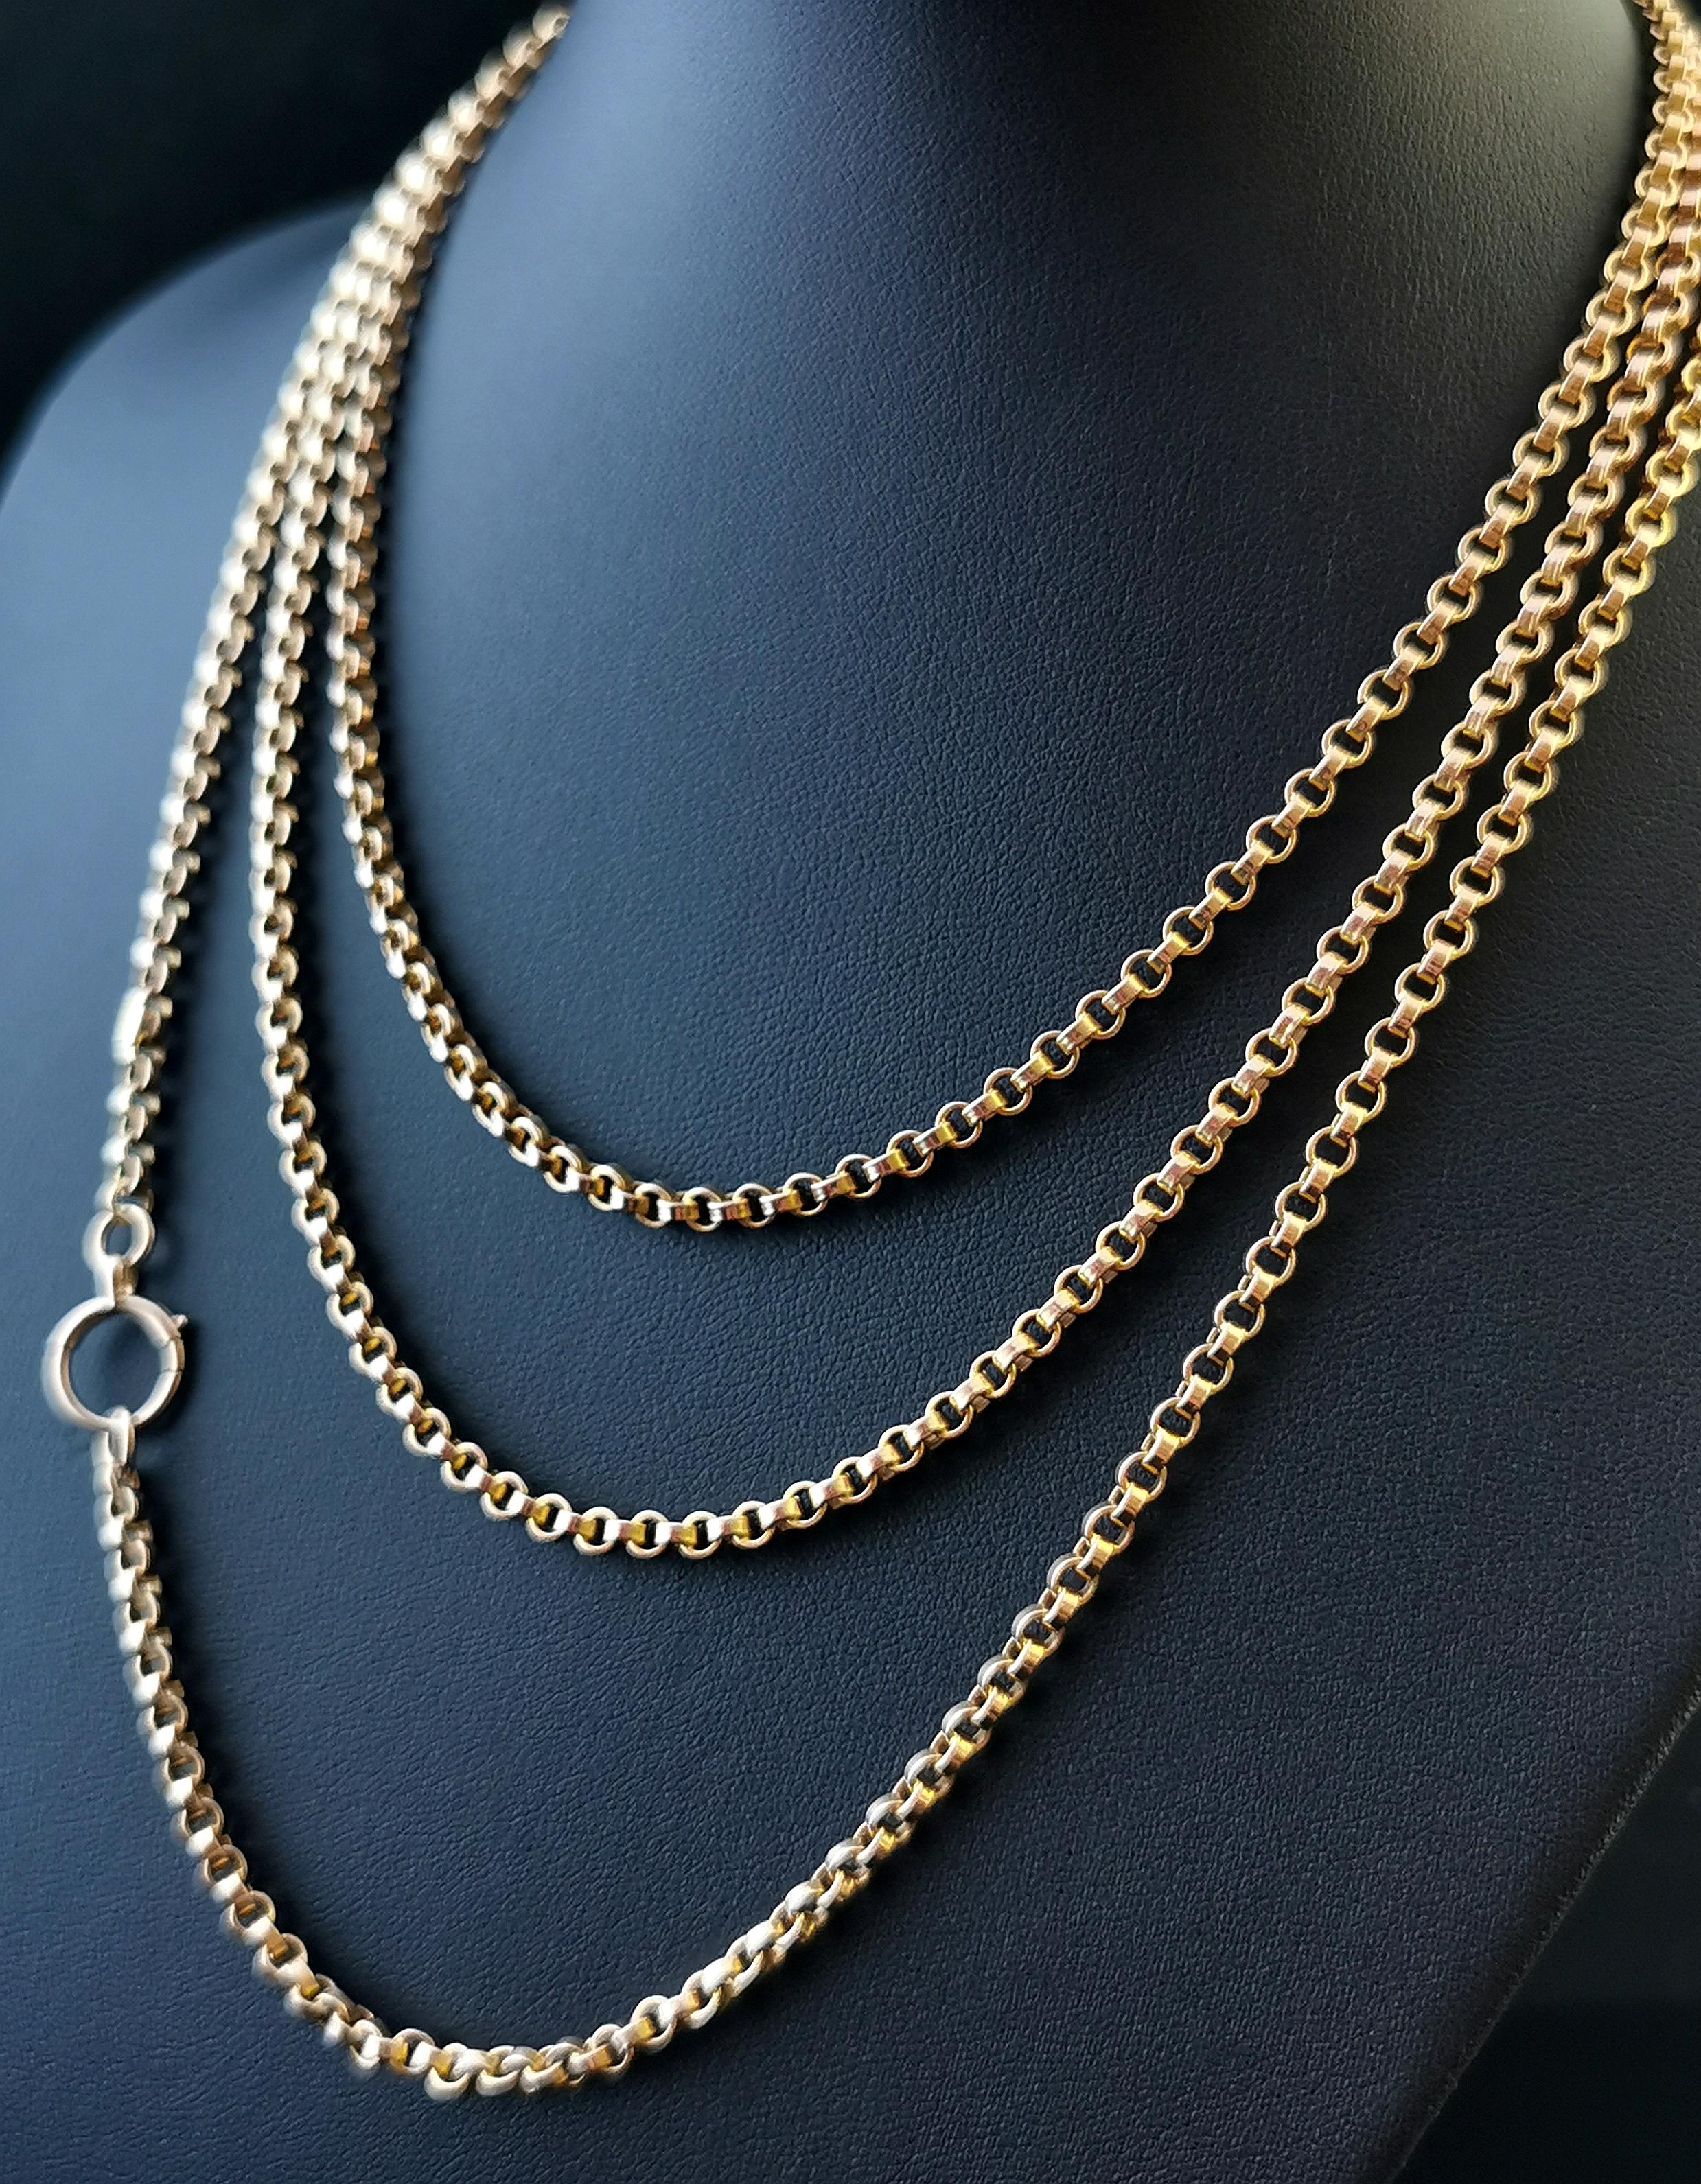 Women's Antique Victorian 9 Karat Yellow Gold Longuard Chain, Muff Chain Necklace, Rolo